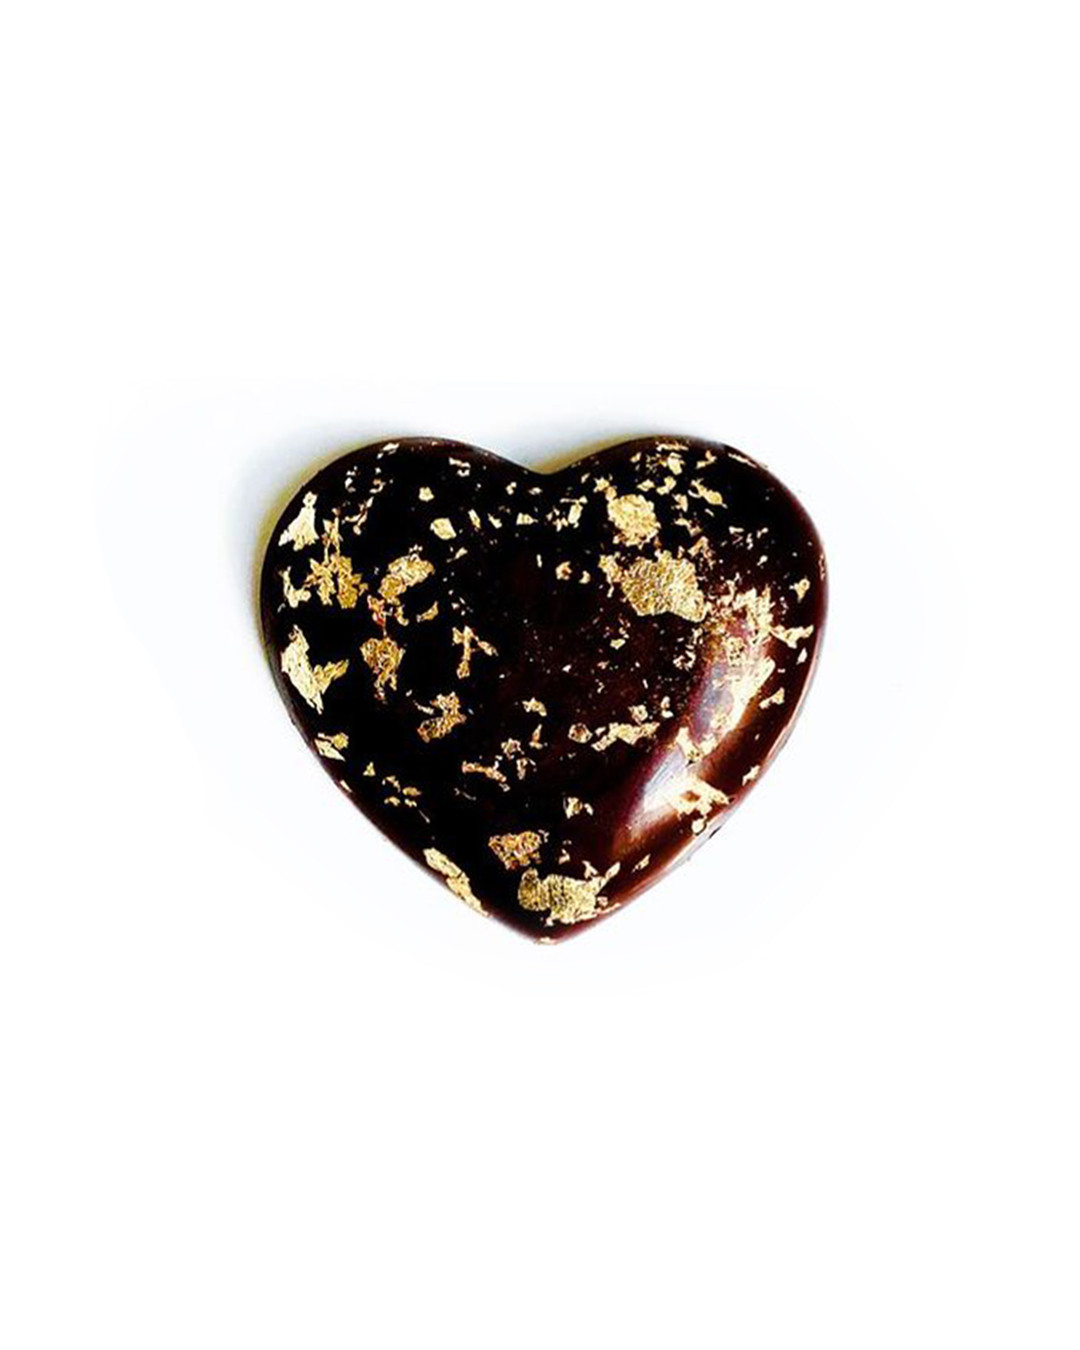 Chocolade hart van Milachocolata